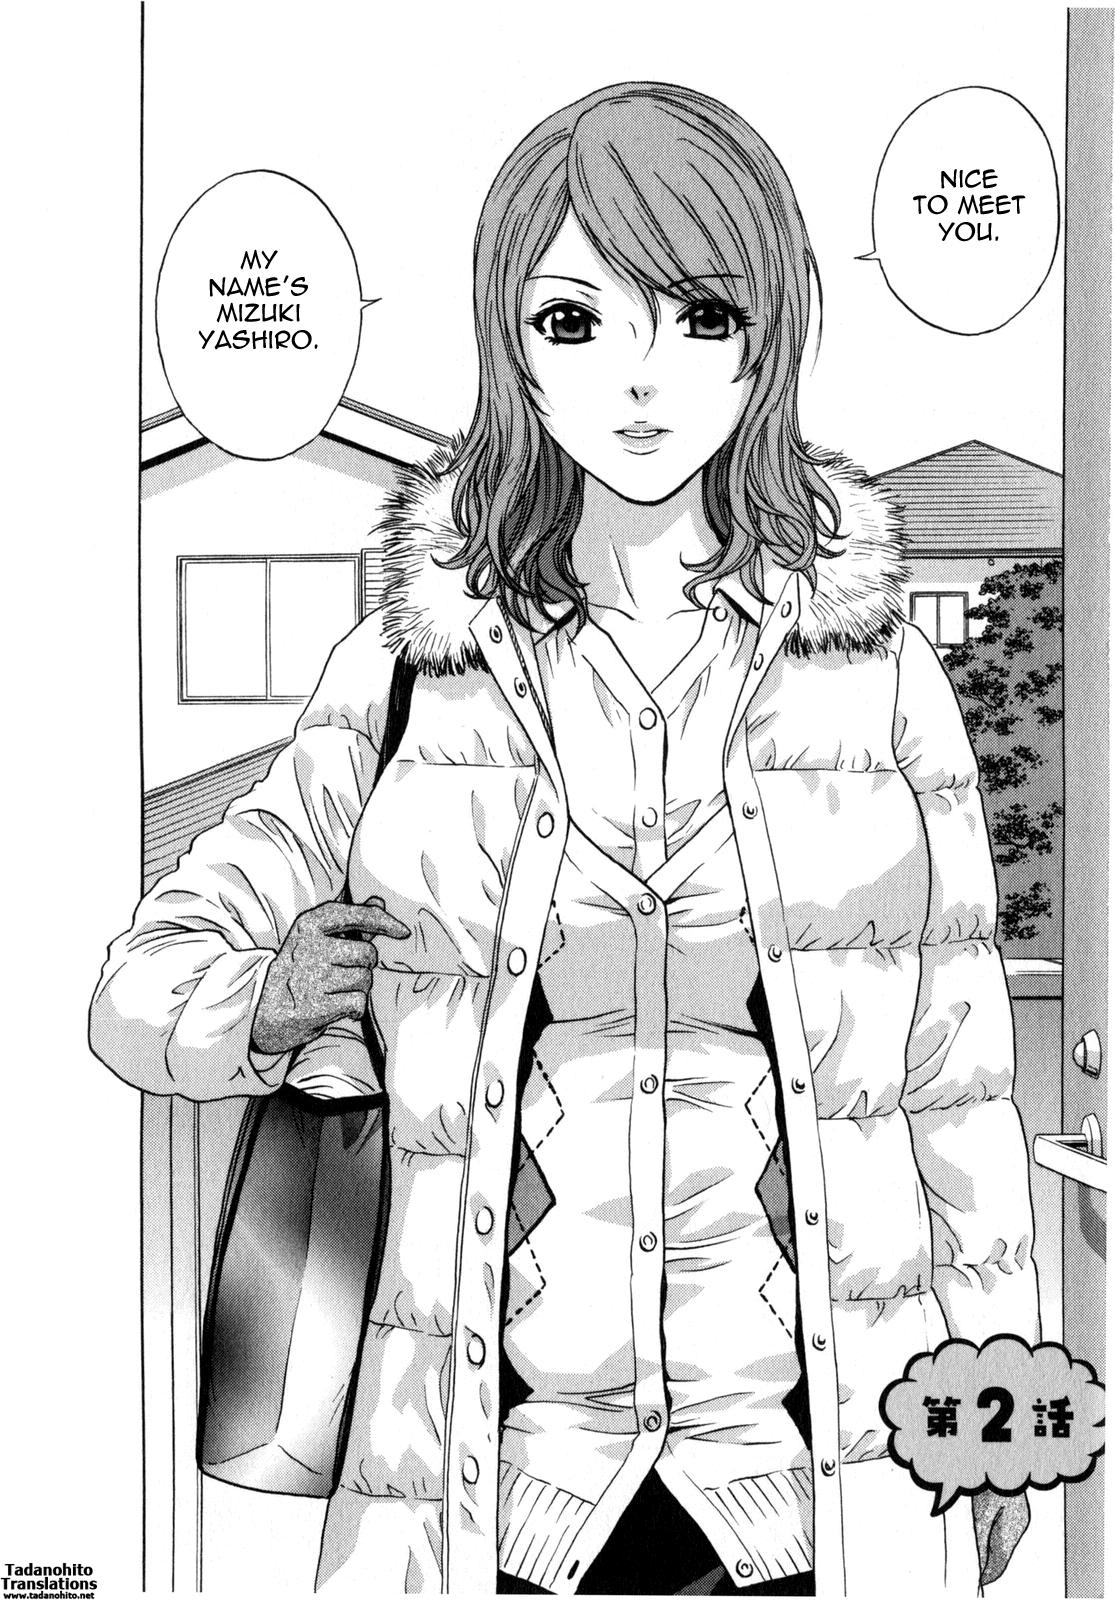 [Hidemaru] Life with Married Women Just Like a Manga 2 - Ch. 1-8 [English] {Tadanohito} 28